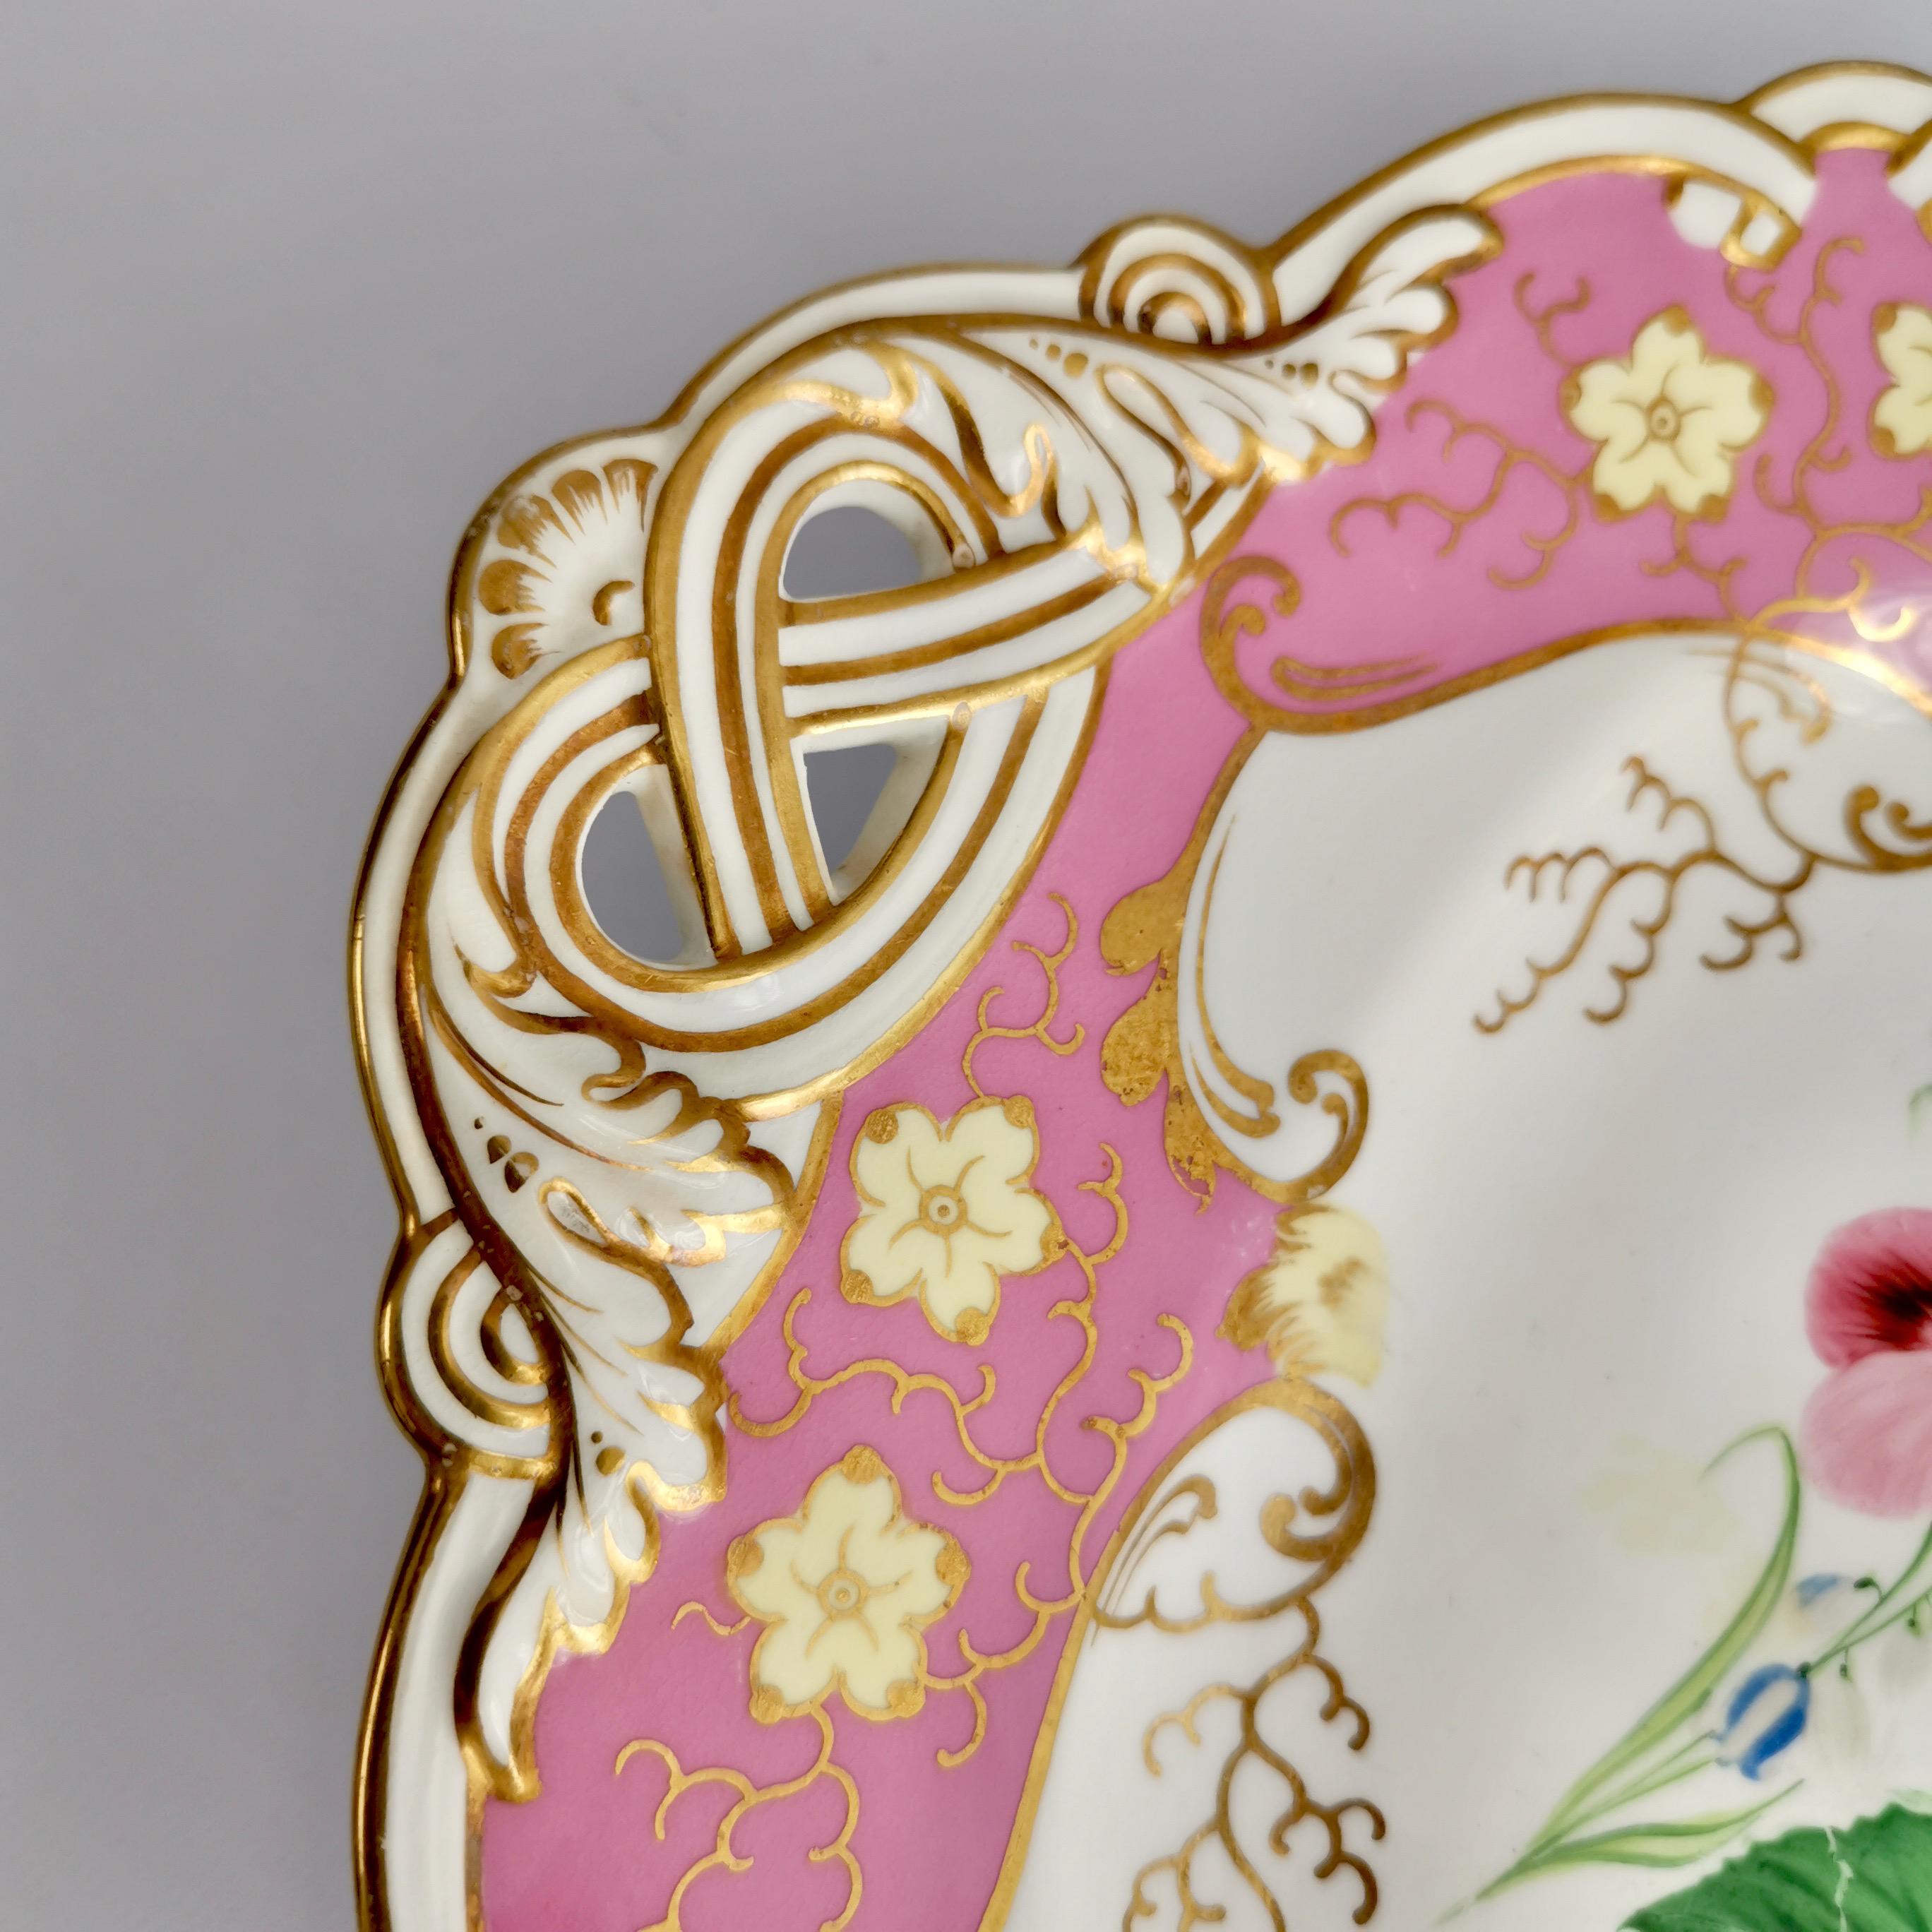 Samuel Alcock Small Porcelain Dessert Set, Pink with Flowers, Victorian 1854 5